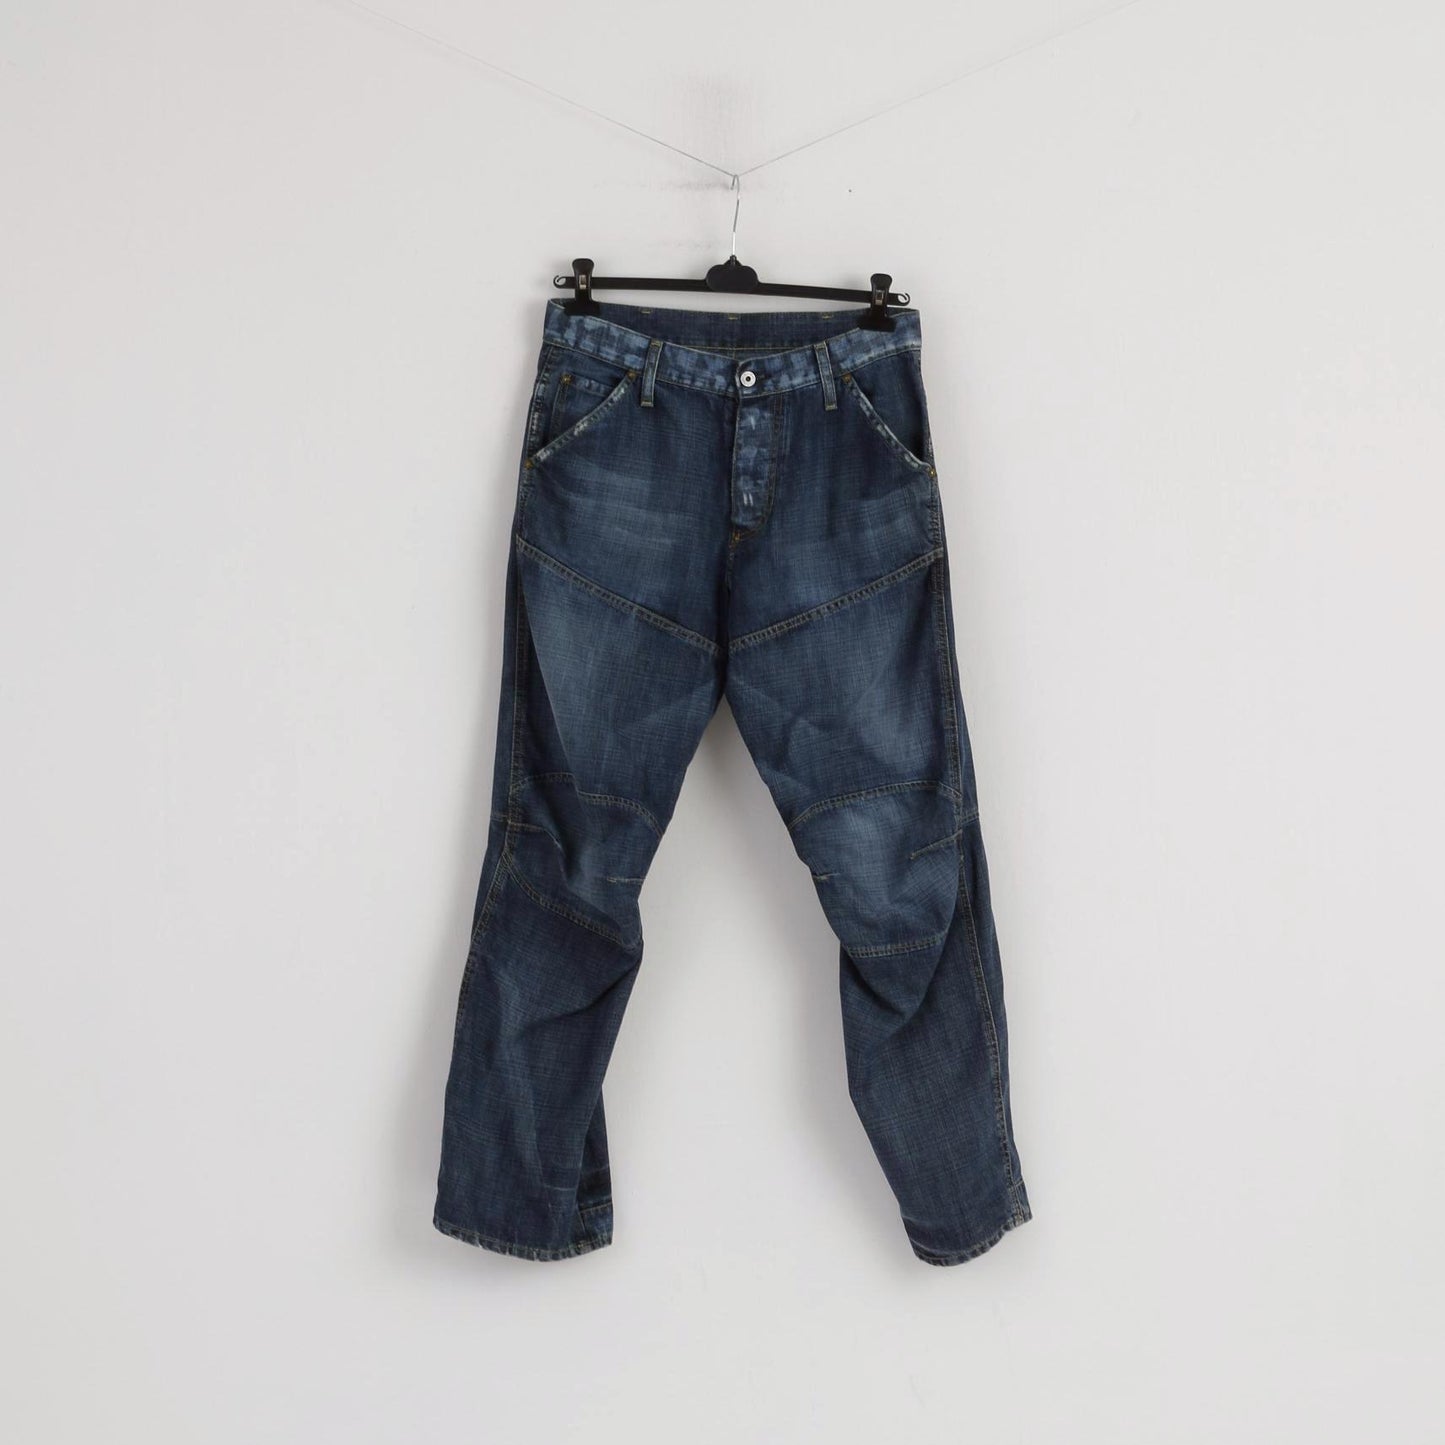 G-STAR Homme 32 Jeans Pantalon Bleu Marine Coton Elwood Embro Denim Pantalon